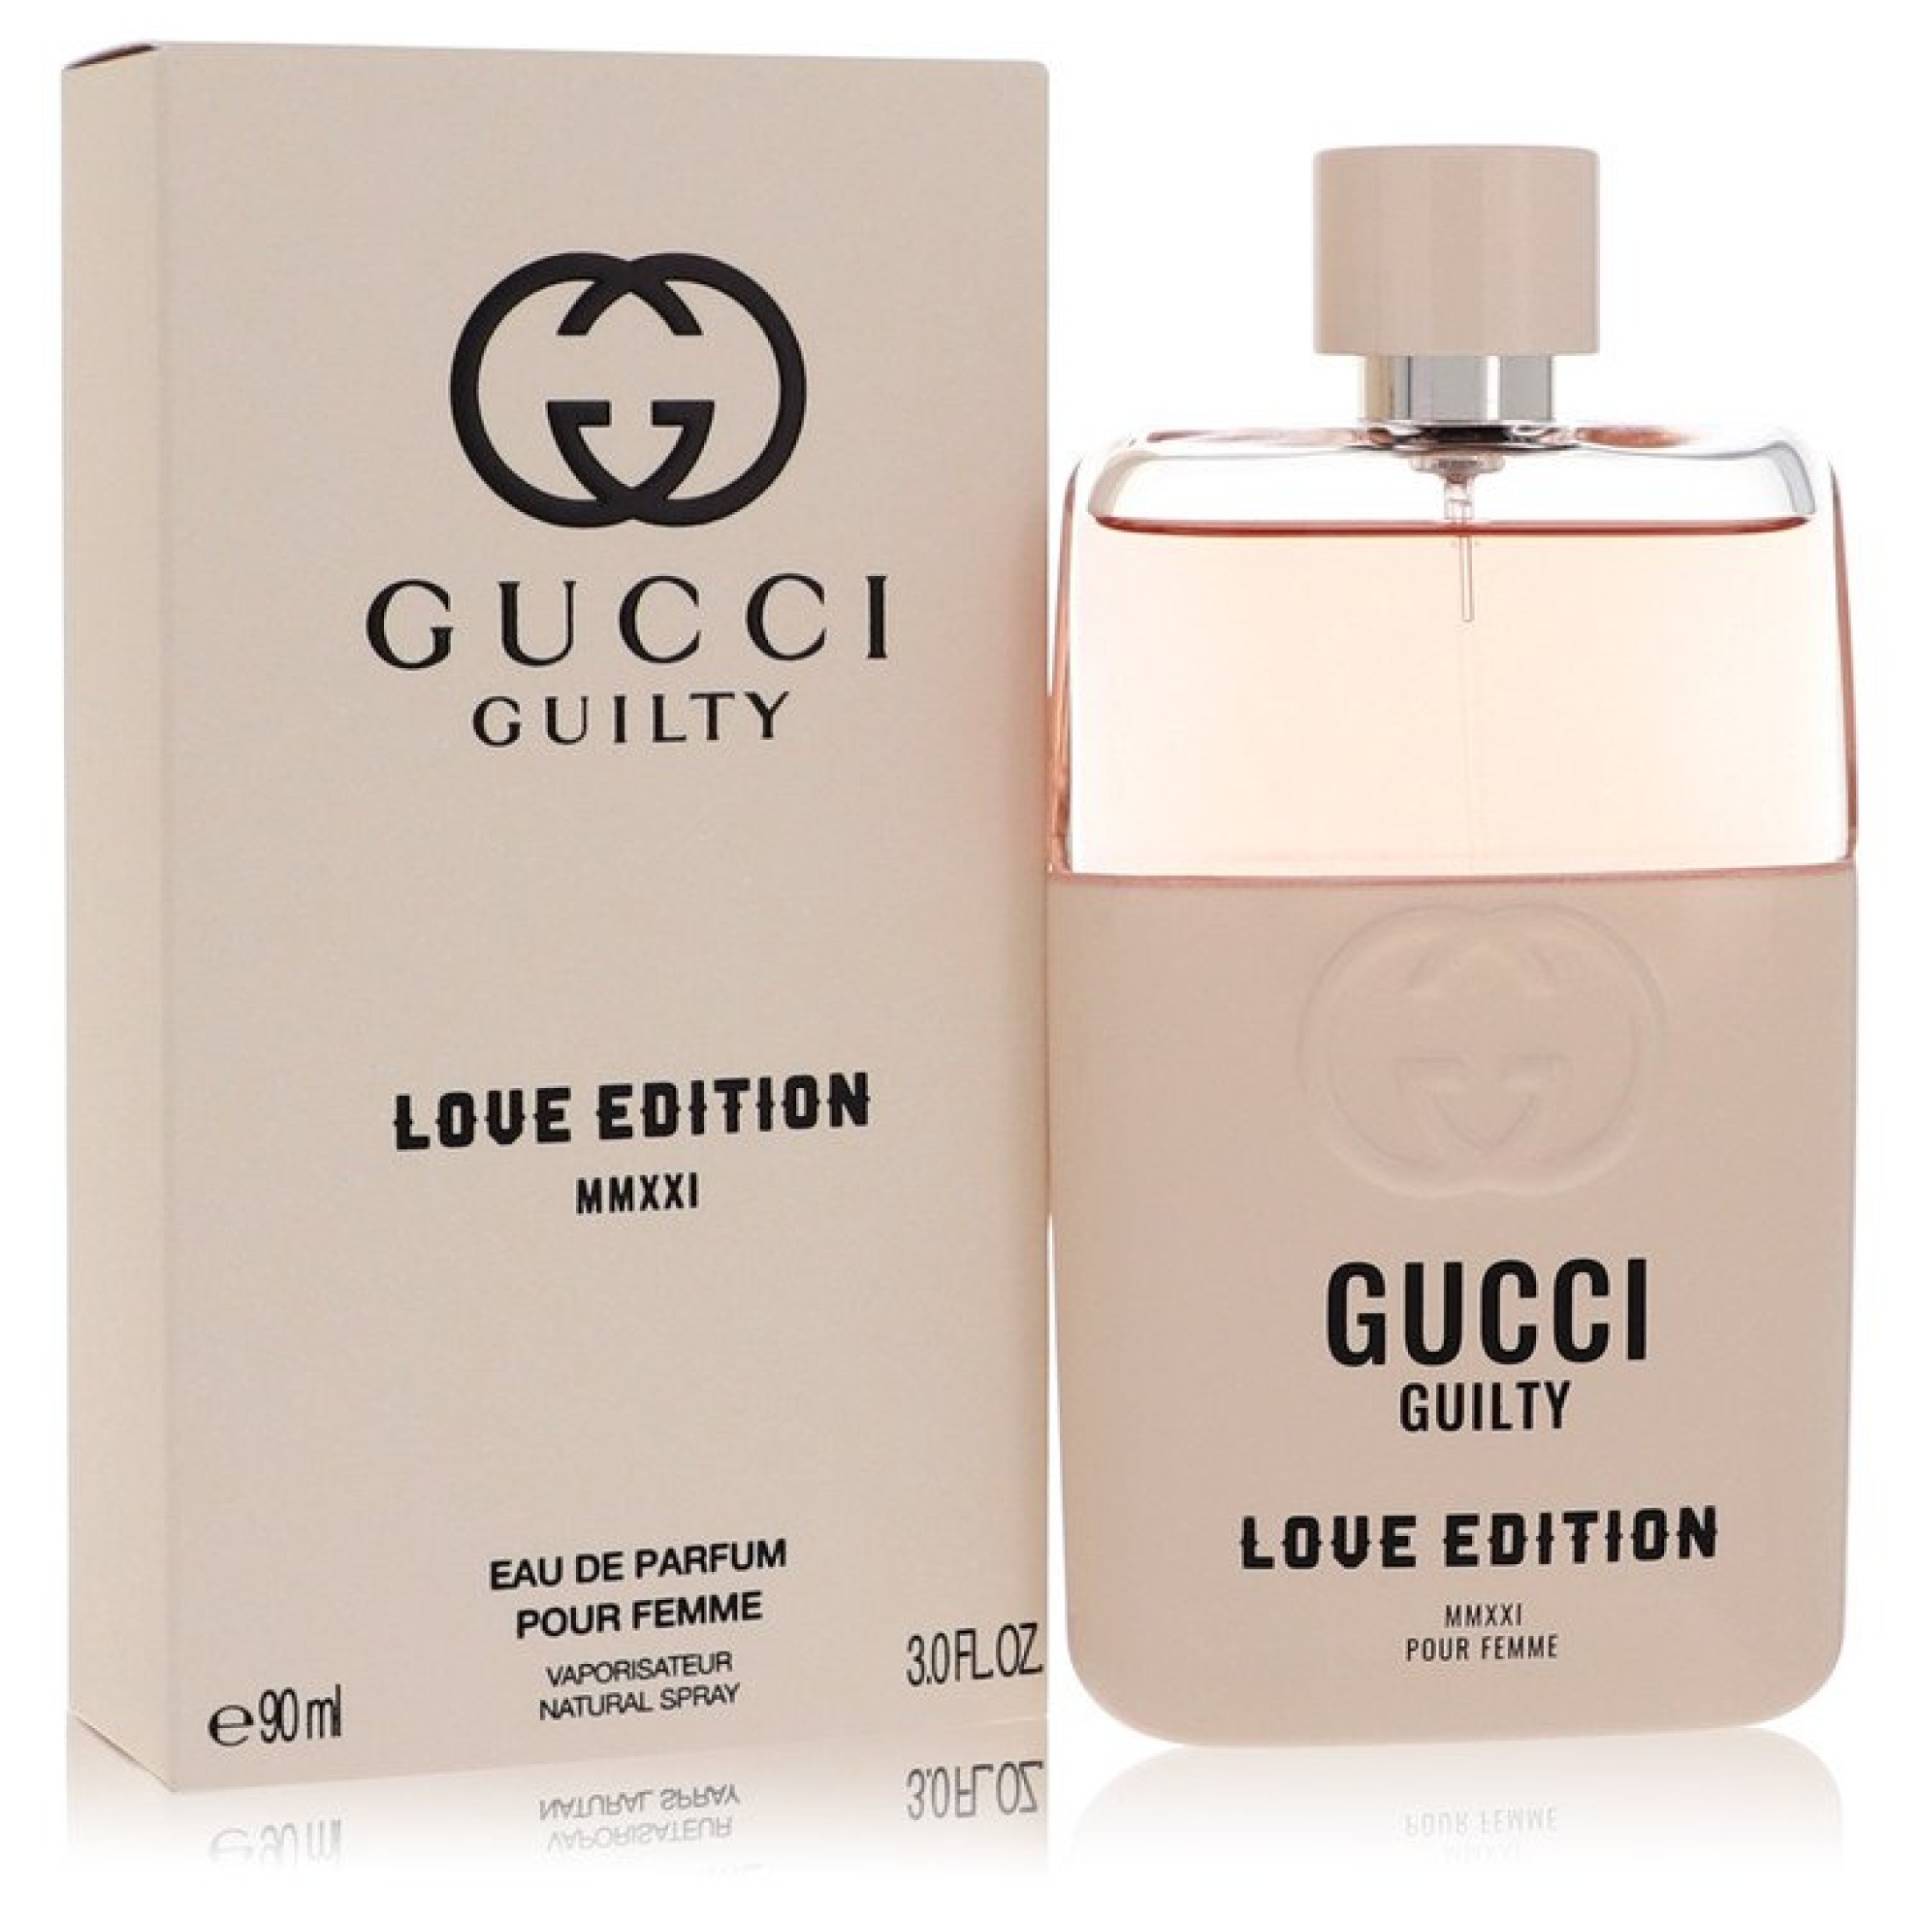 Gucci Guilty Love Edition MMXXI Eau De Parfum Spray 88 ml von Gucci